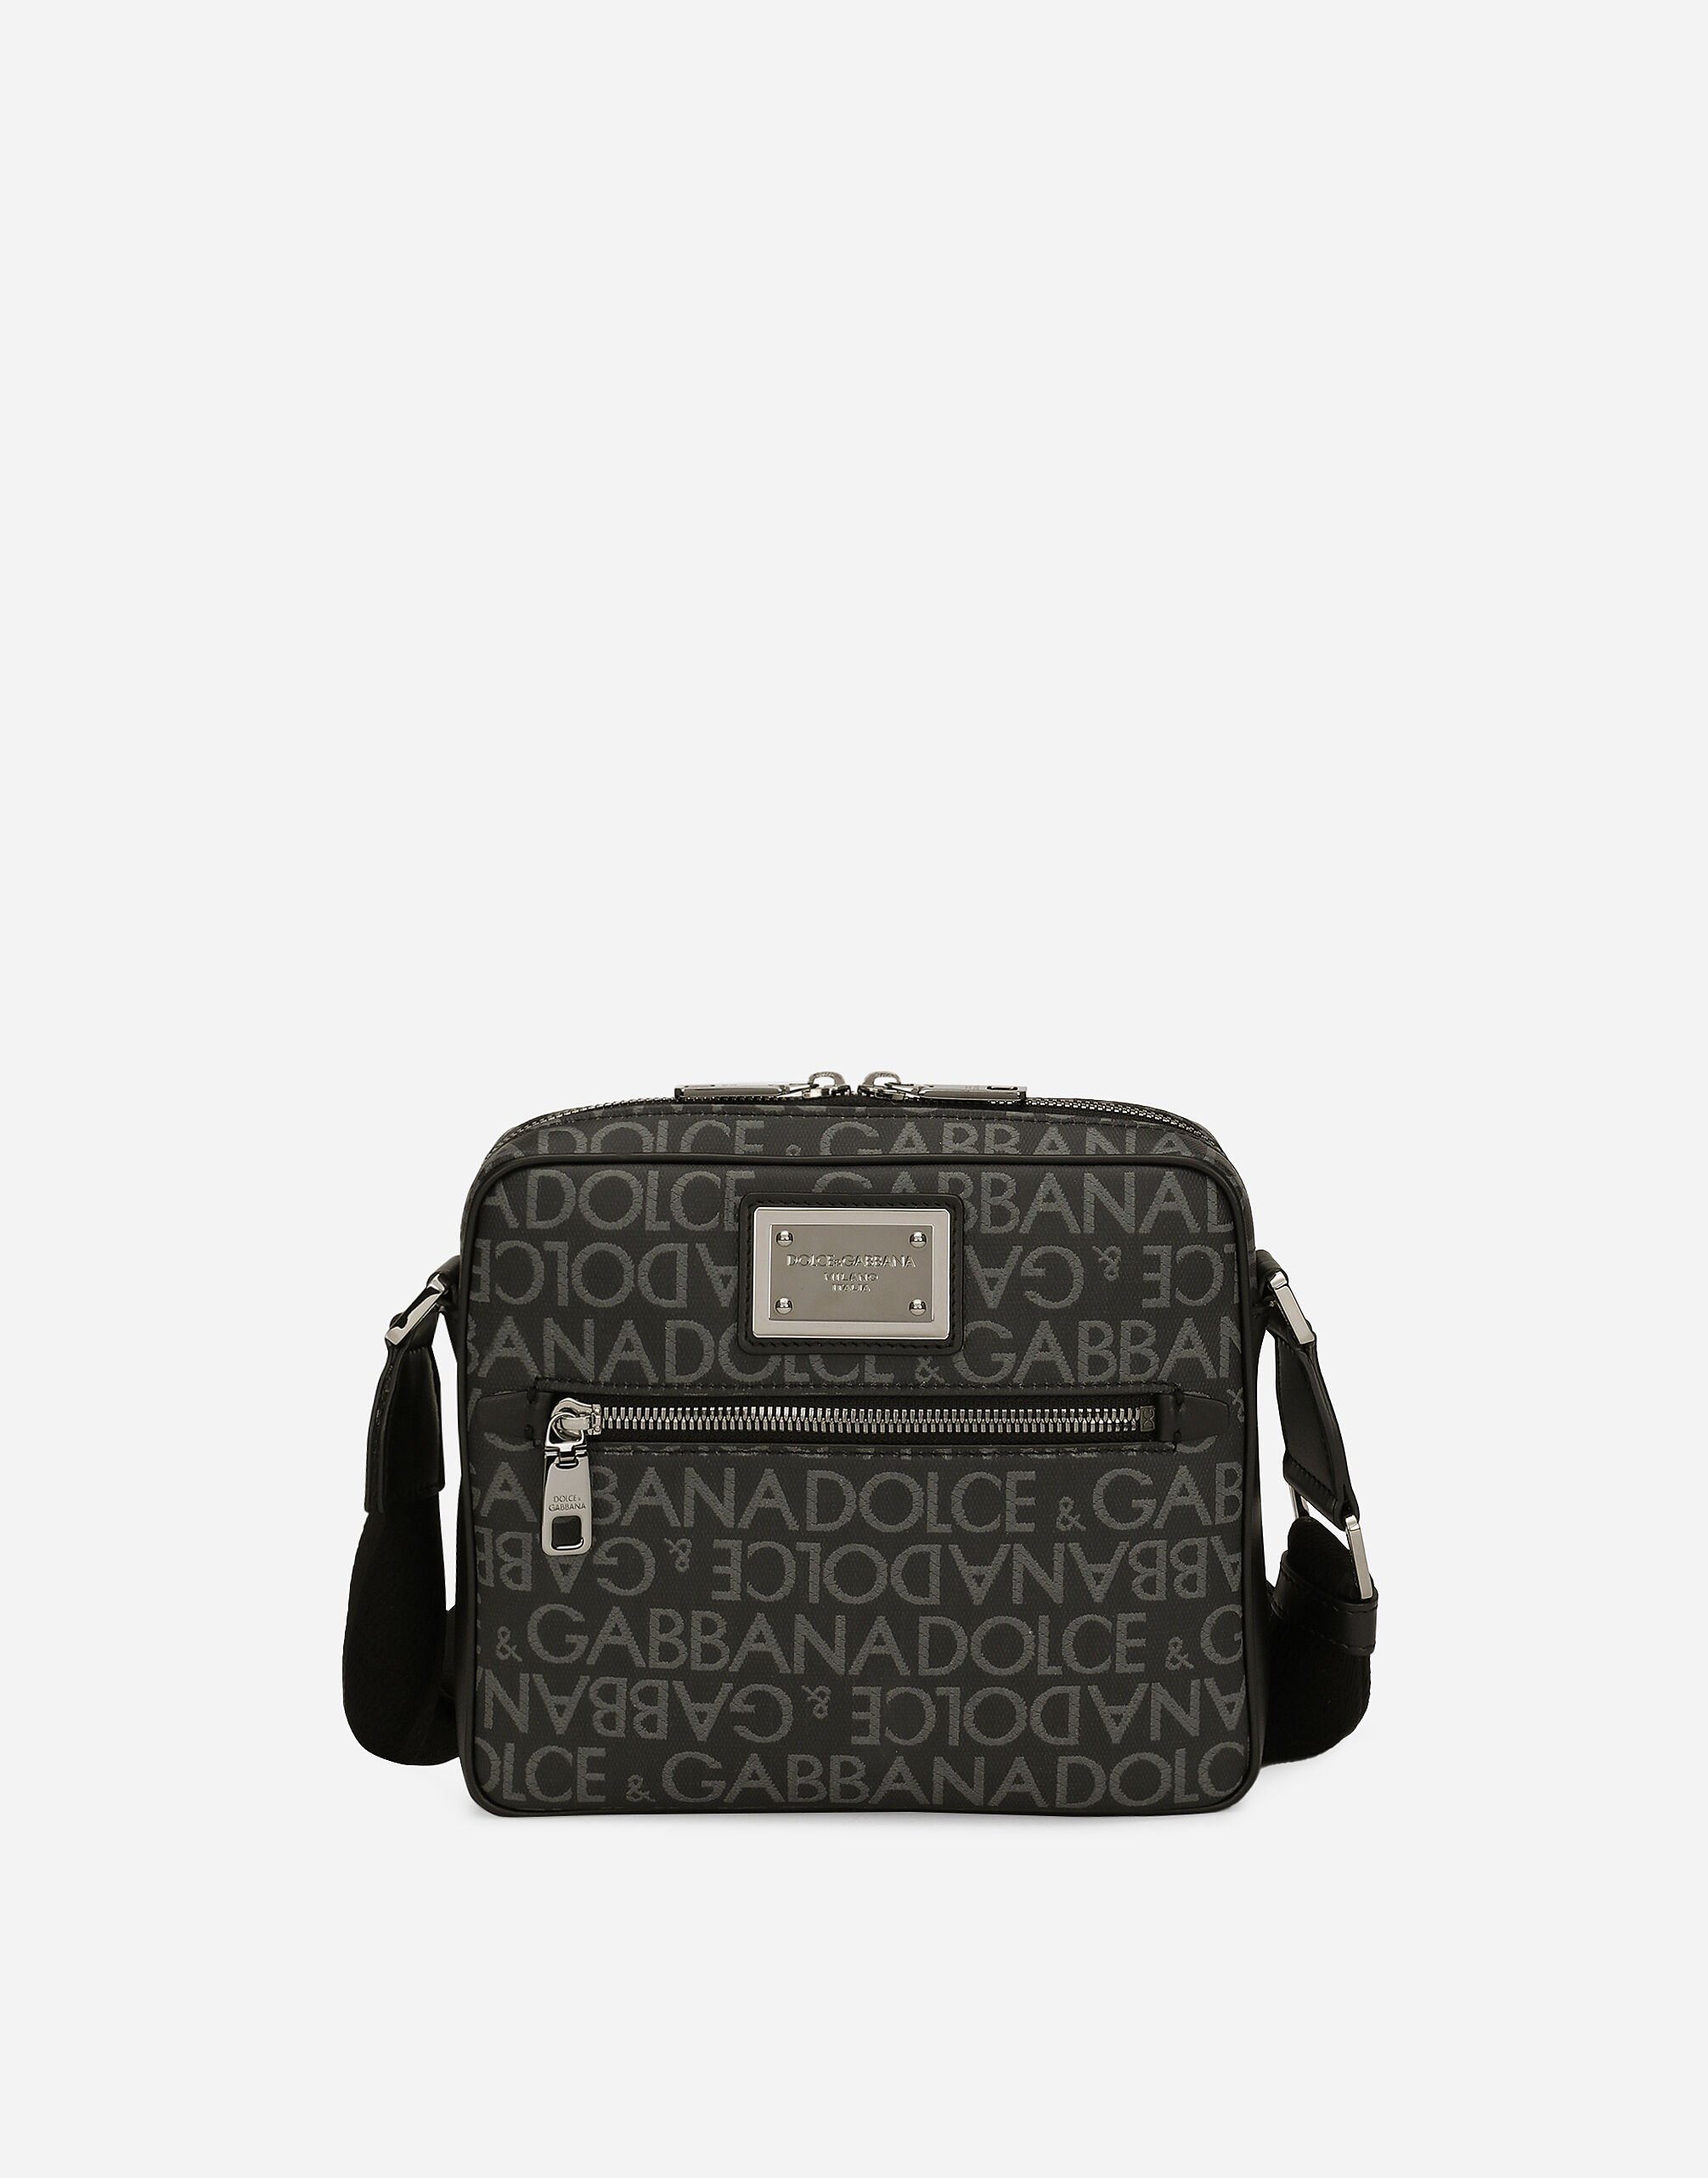 Dolce & Gabbana حقيبة كروسبودي جاكار مطلية بني BM3004A1275